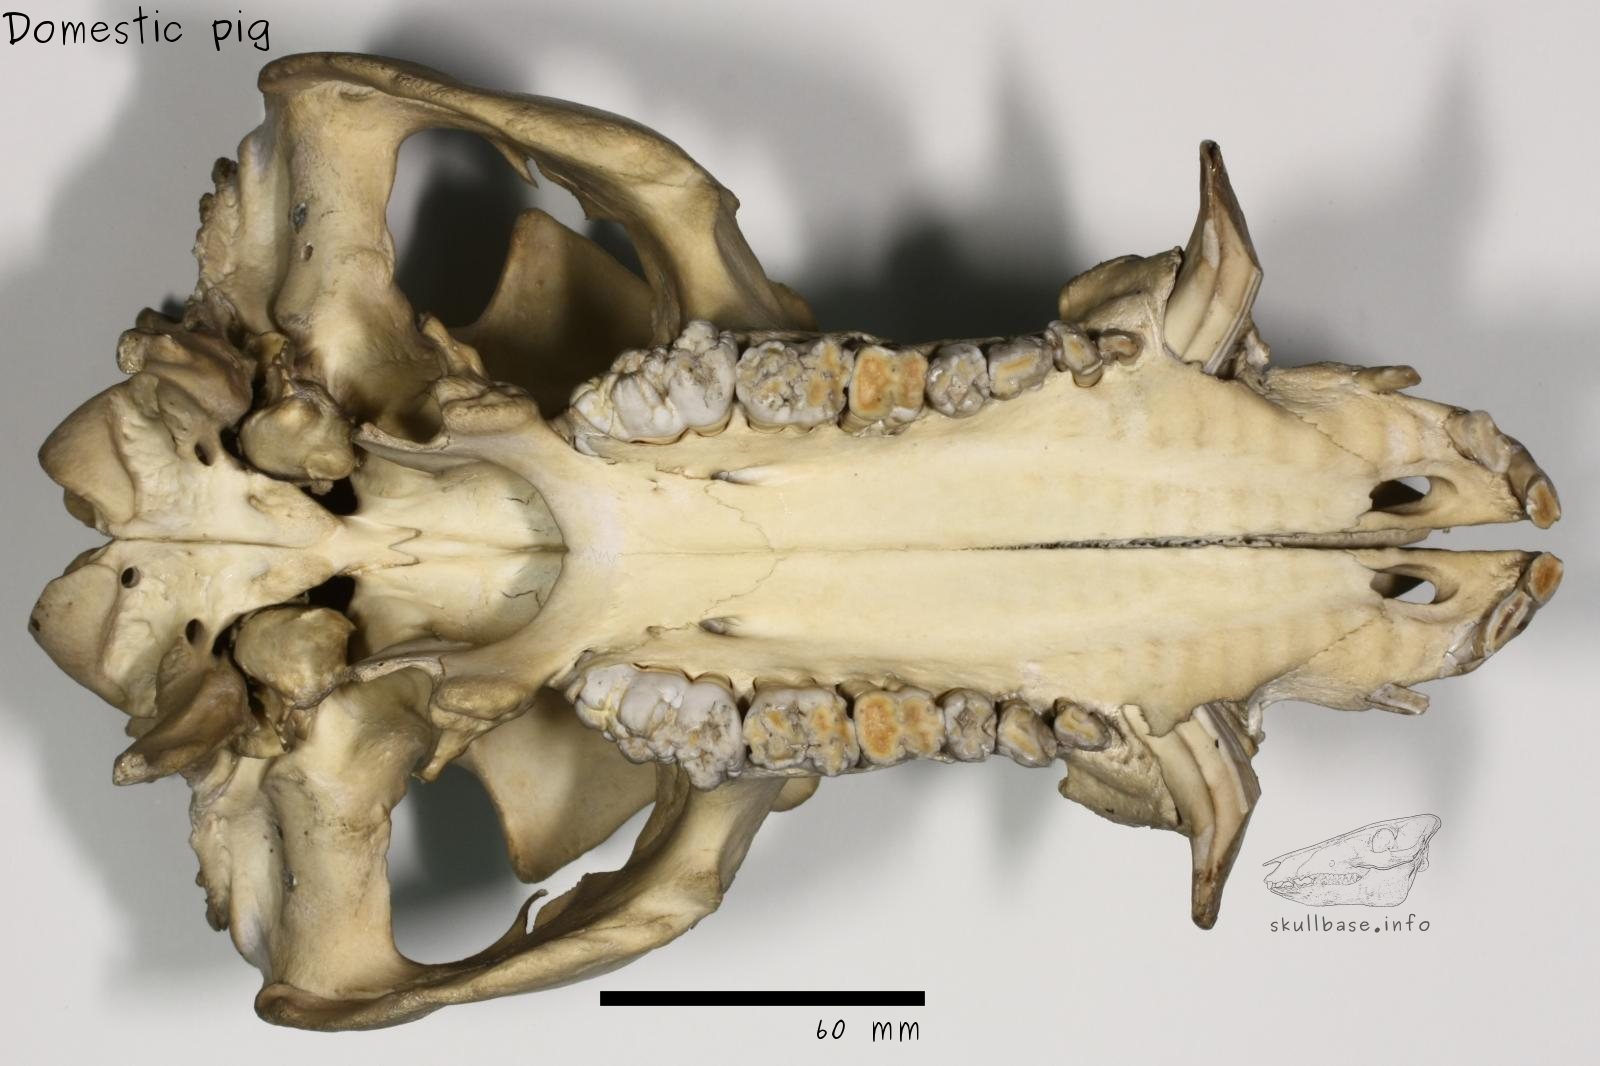 Domestic pig (Sus scrofa domesticus) skull ventral view